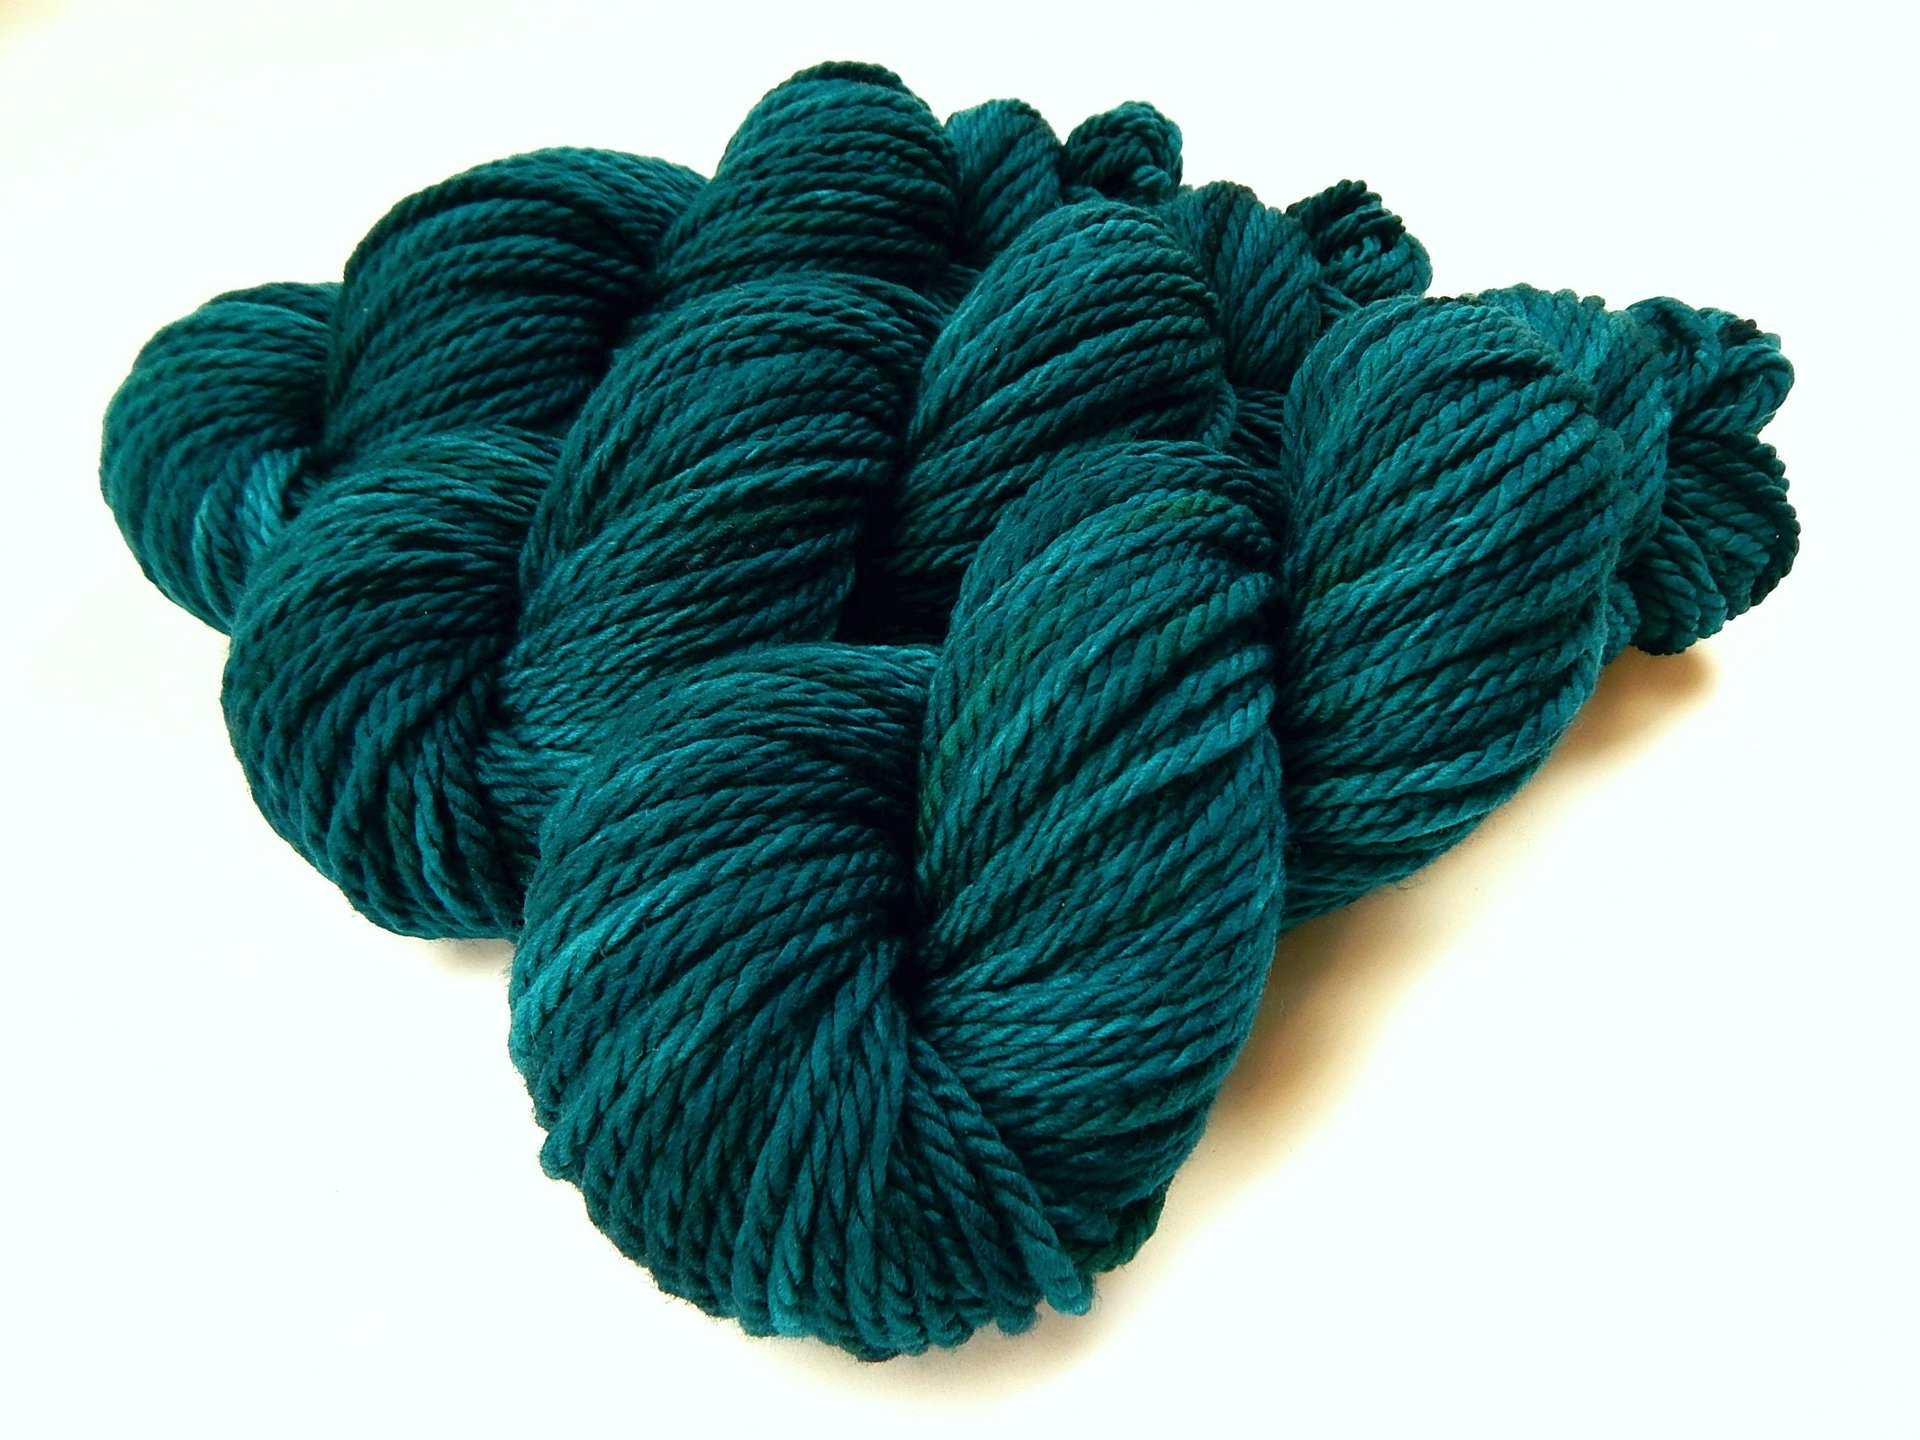 Hand Dyed Yarn, Bulky Superwash Merino Wool - Deep Sea Tonal - Indie Dyer Thick Teal Yarn, Blue Green Chunky Knitting Yarn